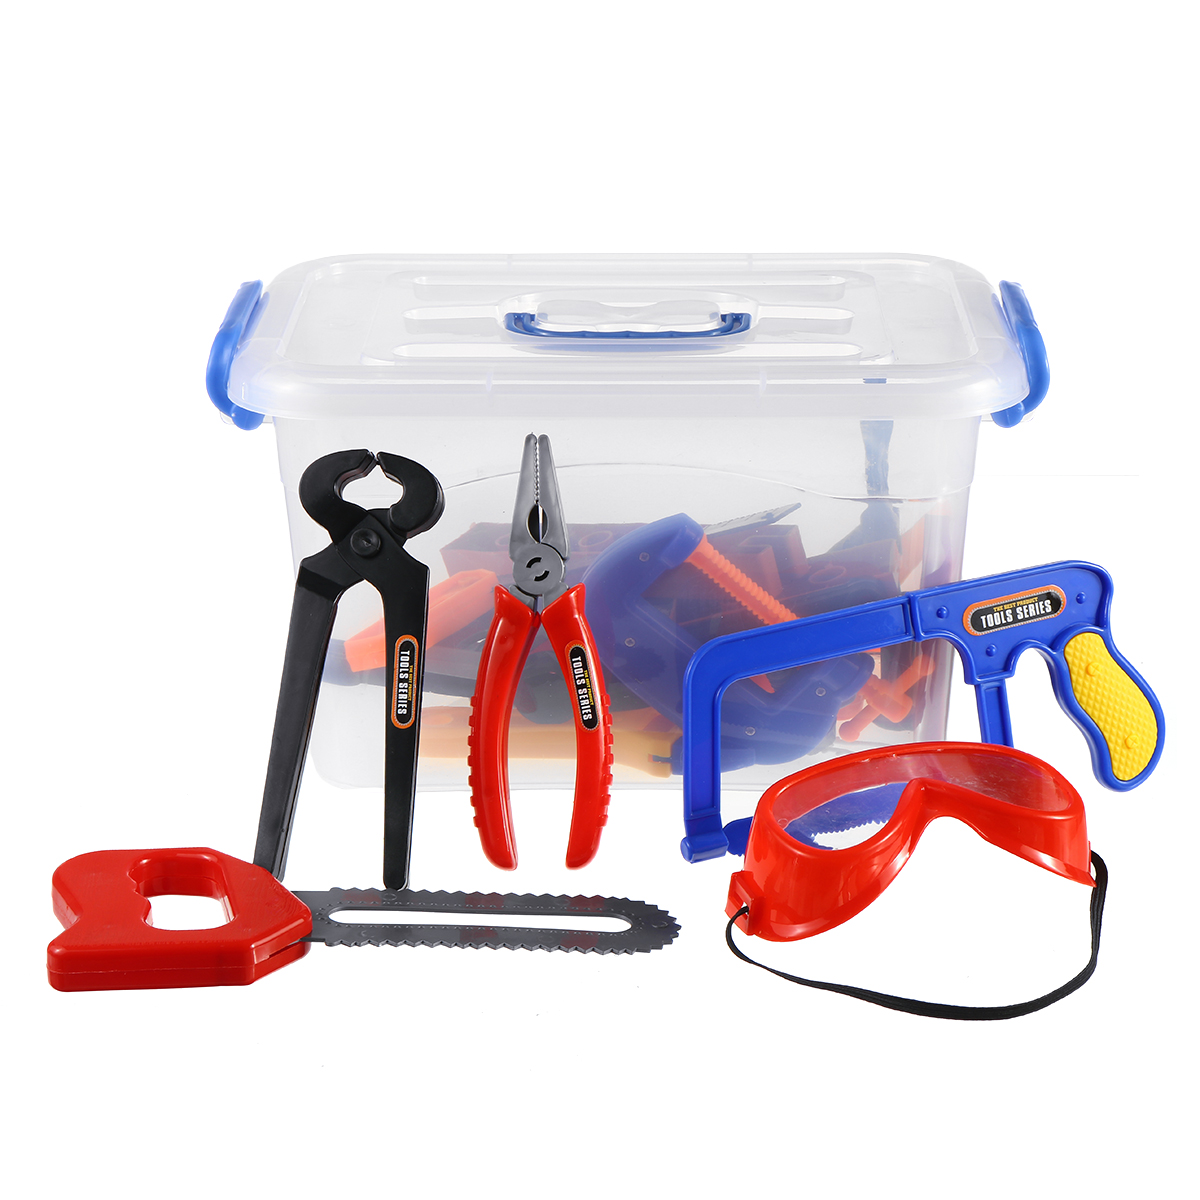 Childrens-Toolbox-Baby-Simulation-Repair-Tool-Electric-Drill-Screwdriver-Repair-Tool-Toy-Set-Boy-Kid-1641269-10